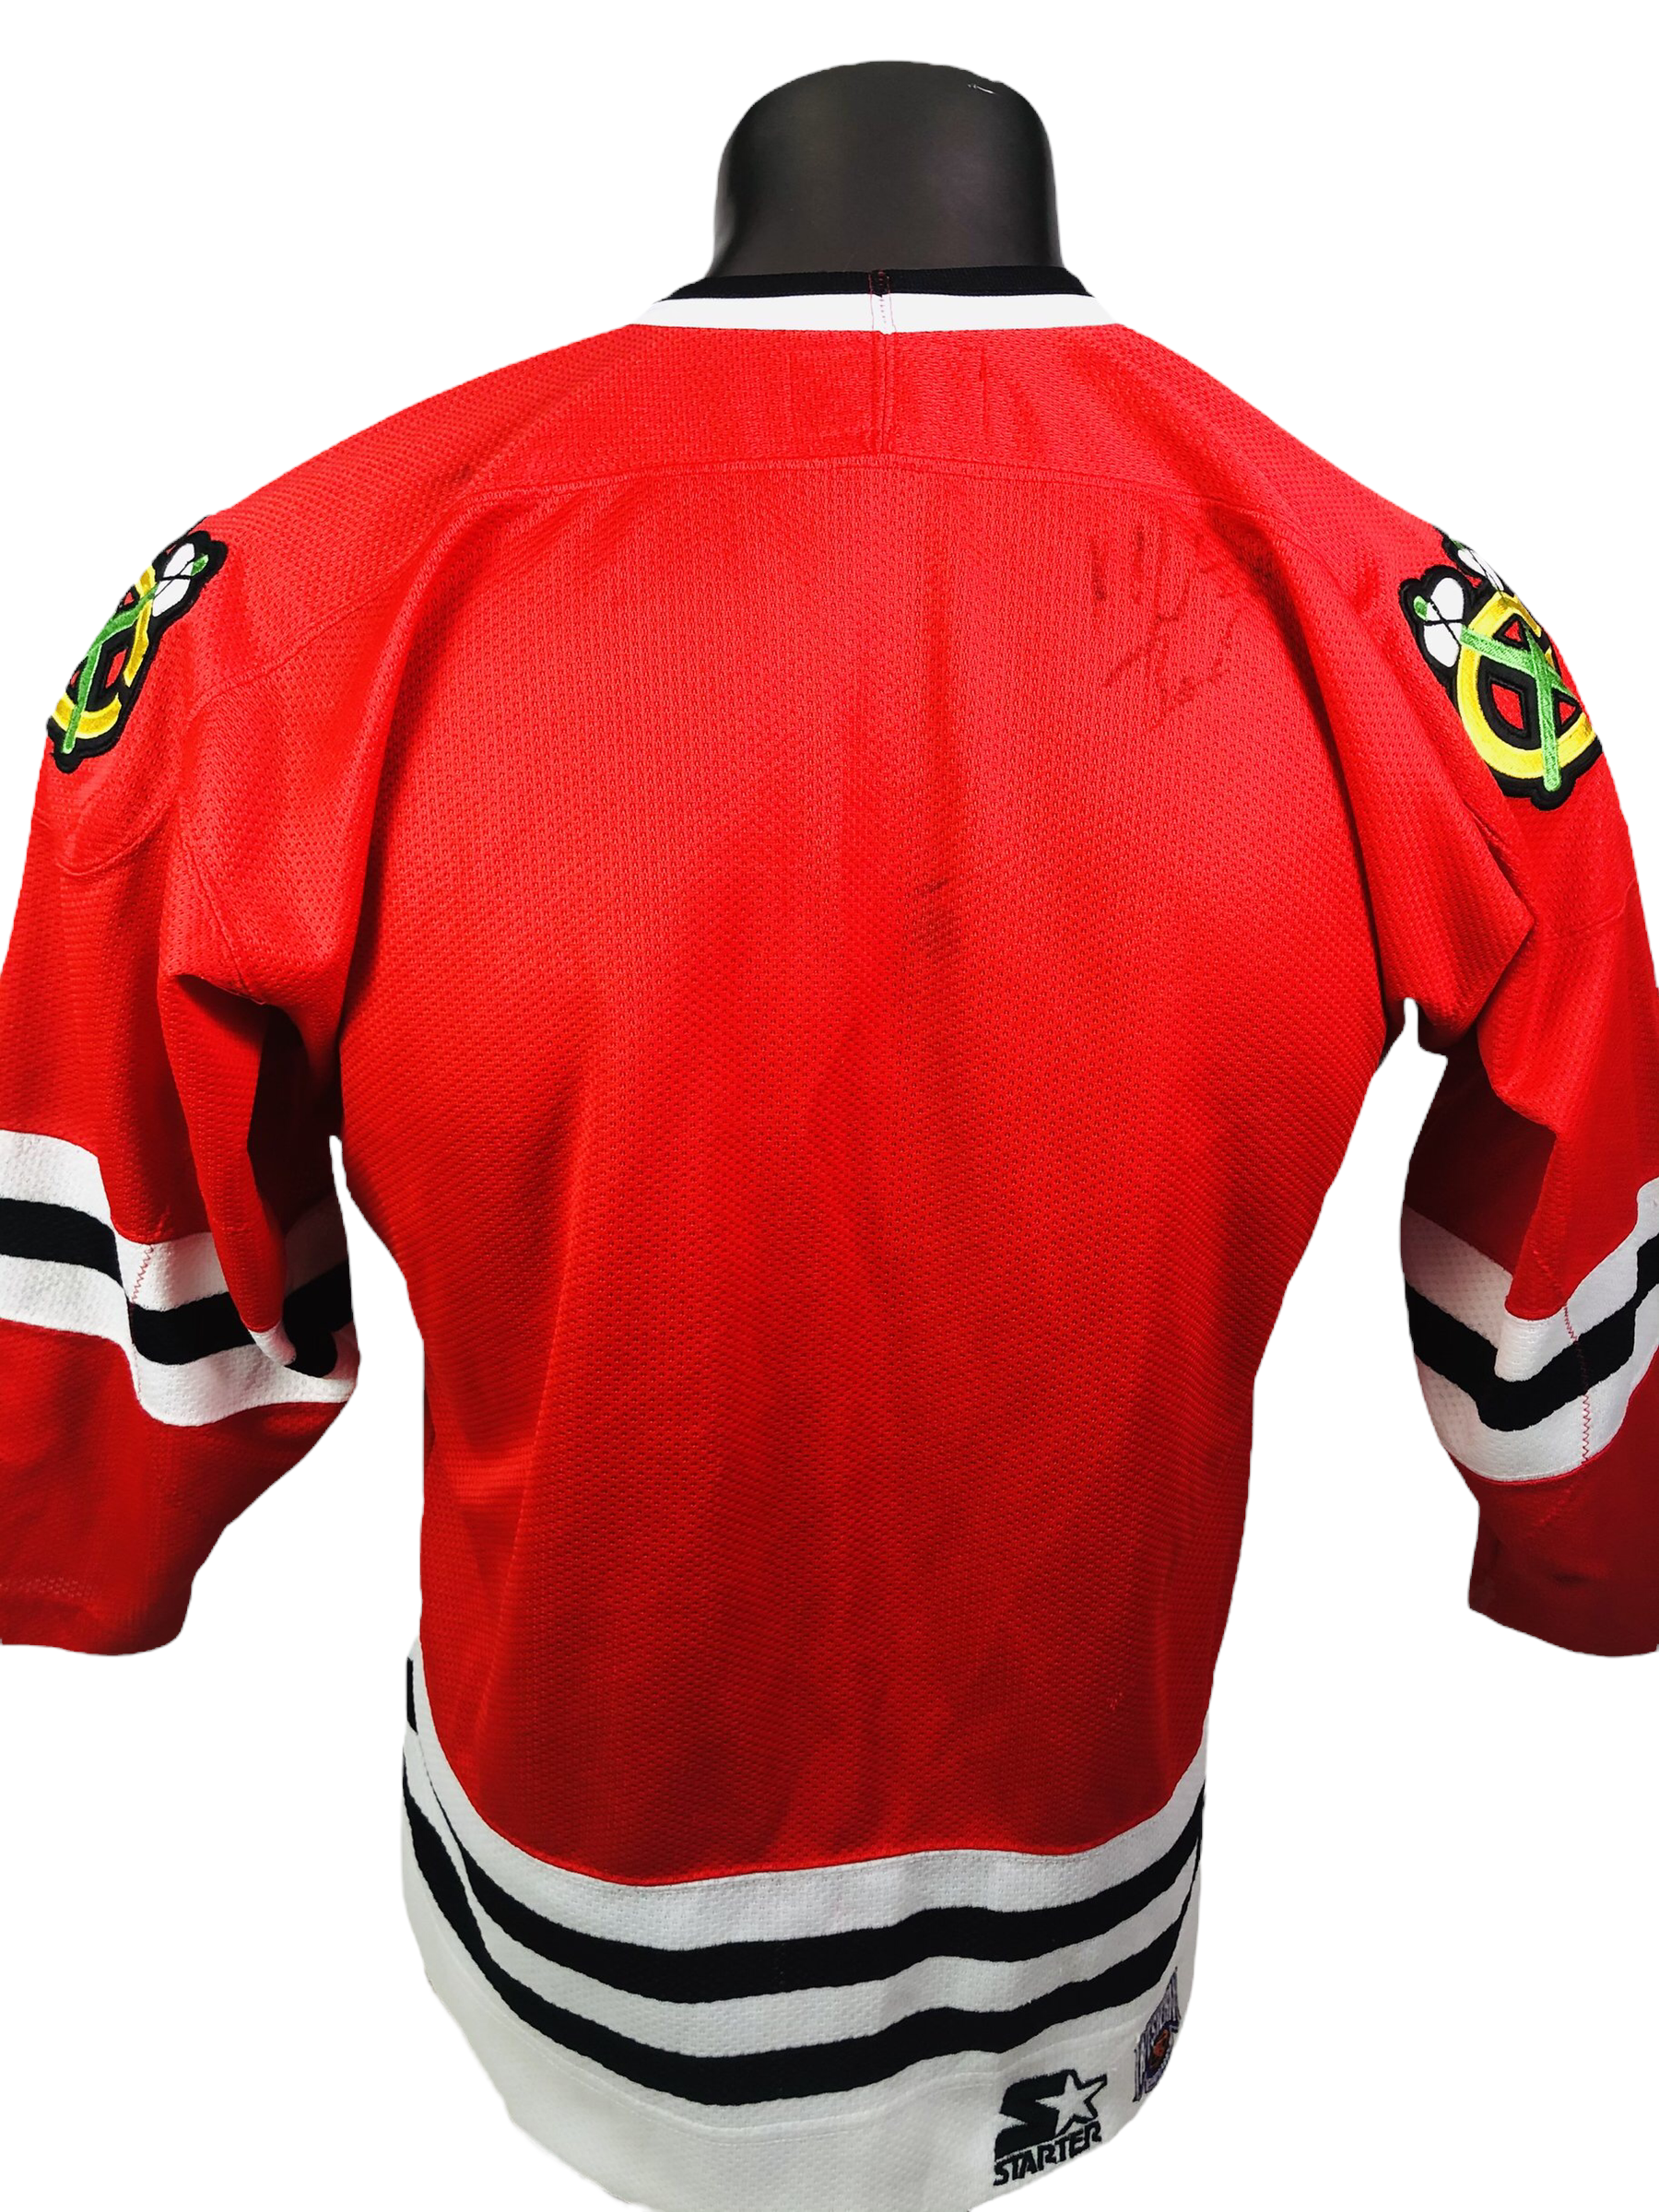 Vintage Chicago Blackhawks Starter Hockey Jersey Size Large 90s NHL